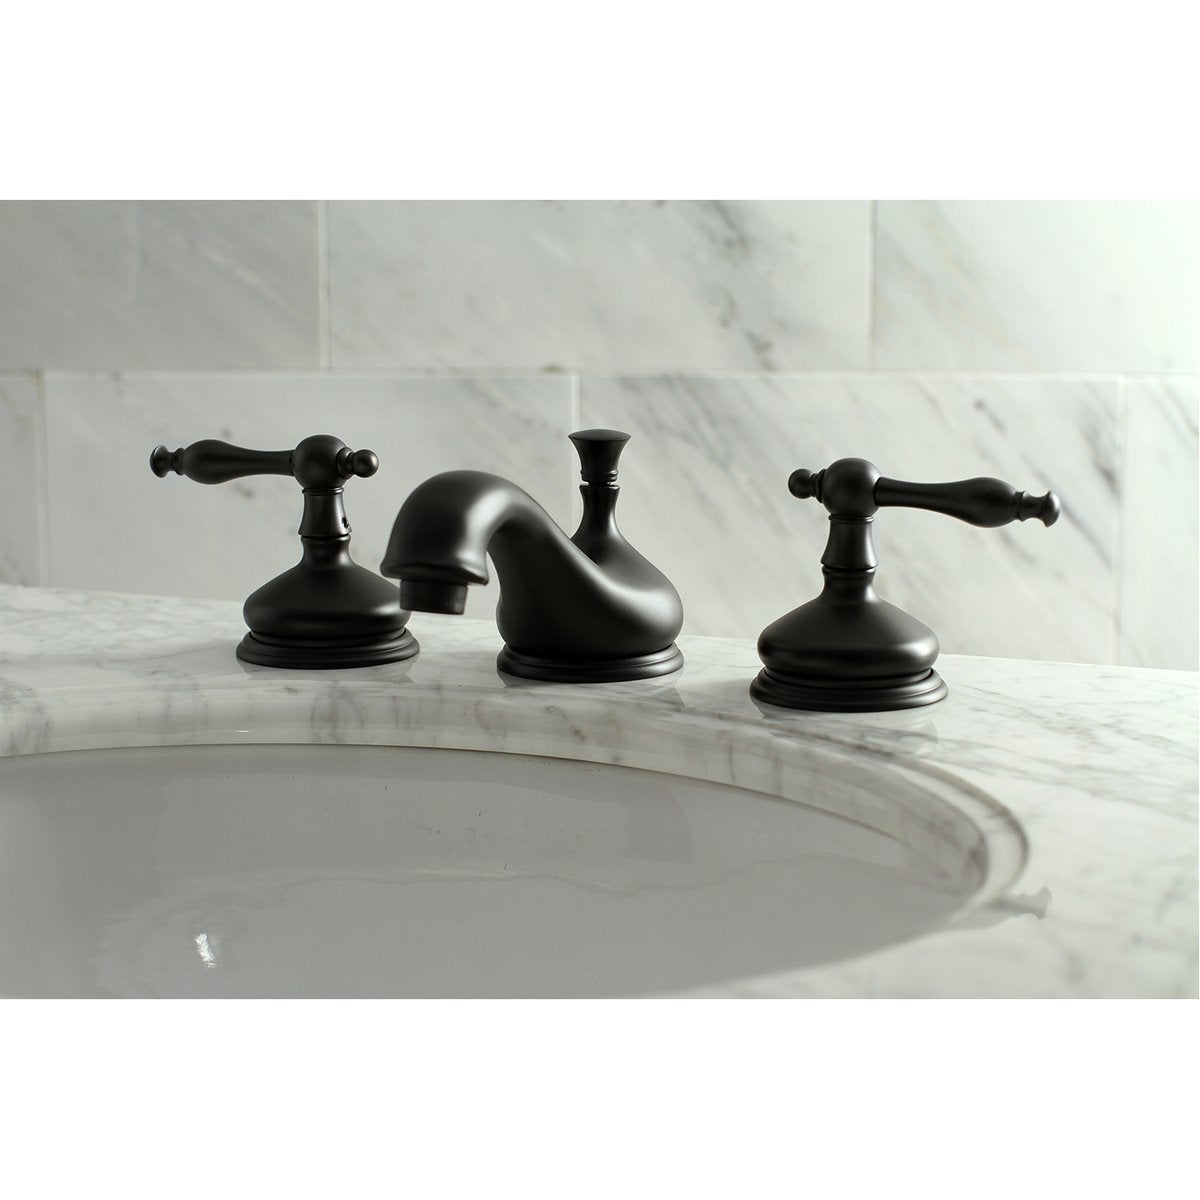 Kingston Brass Heritage Deck Mount 8" Widespread Bathroom Faucet